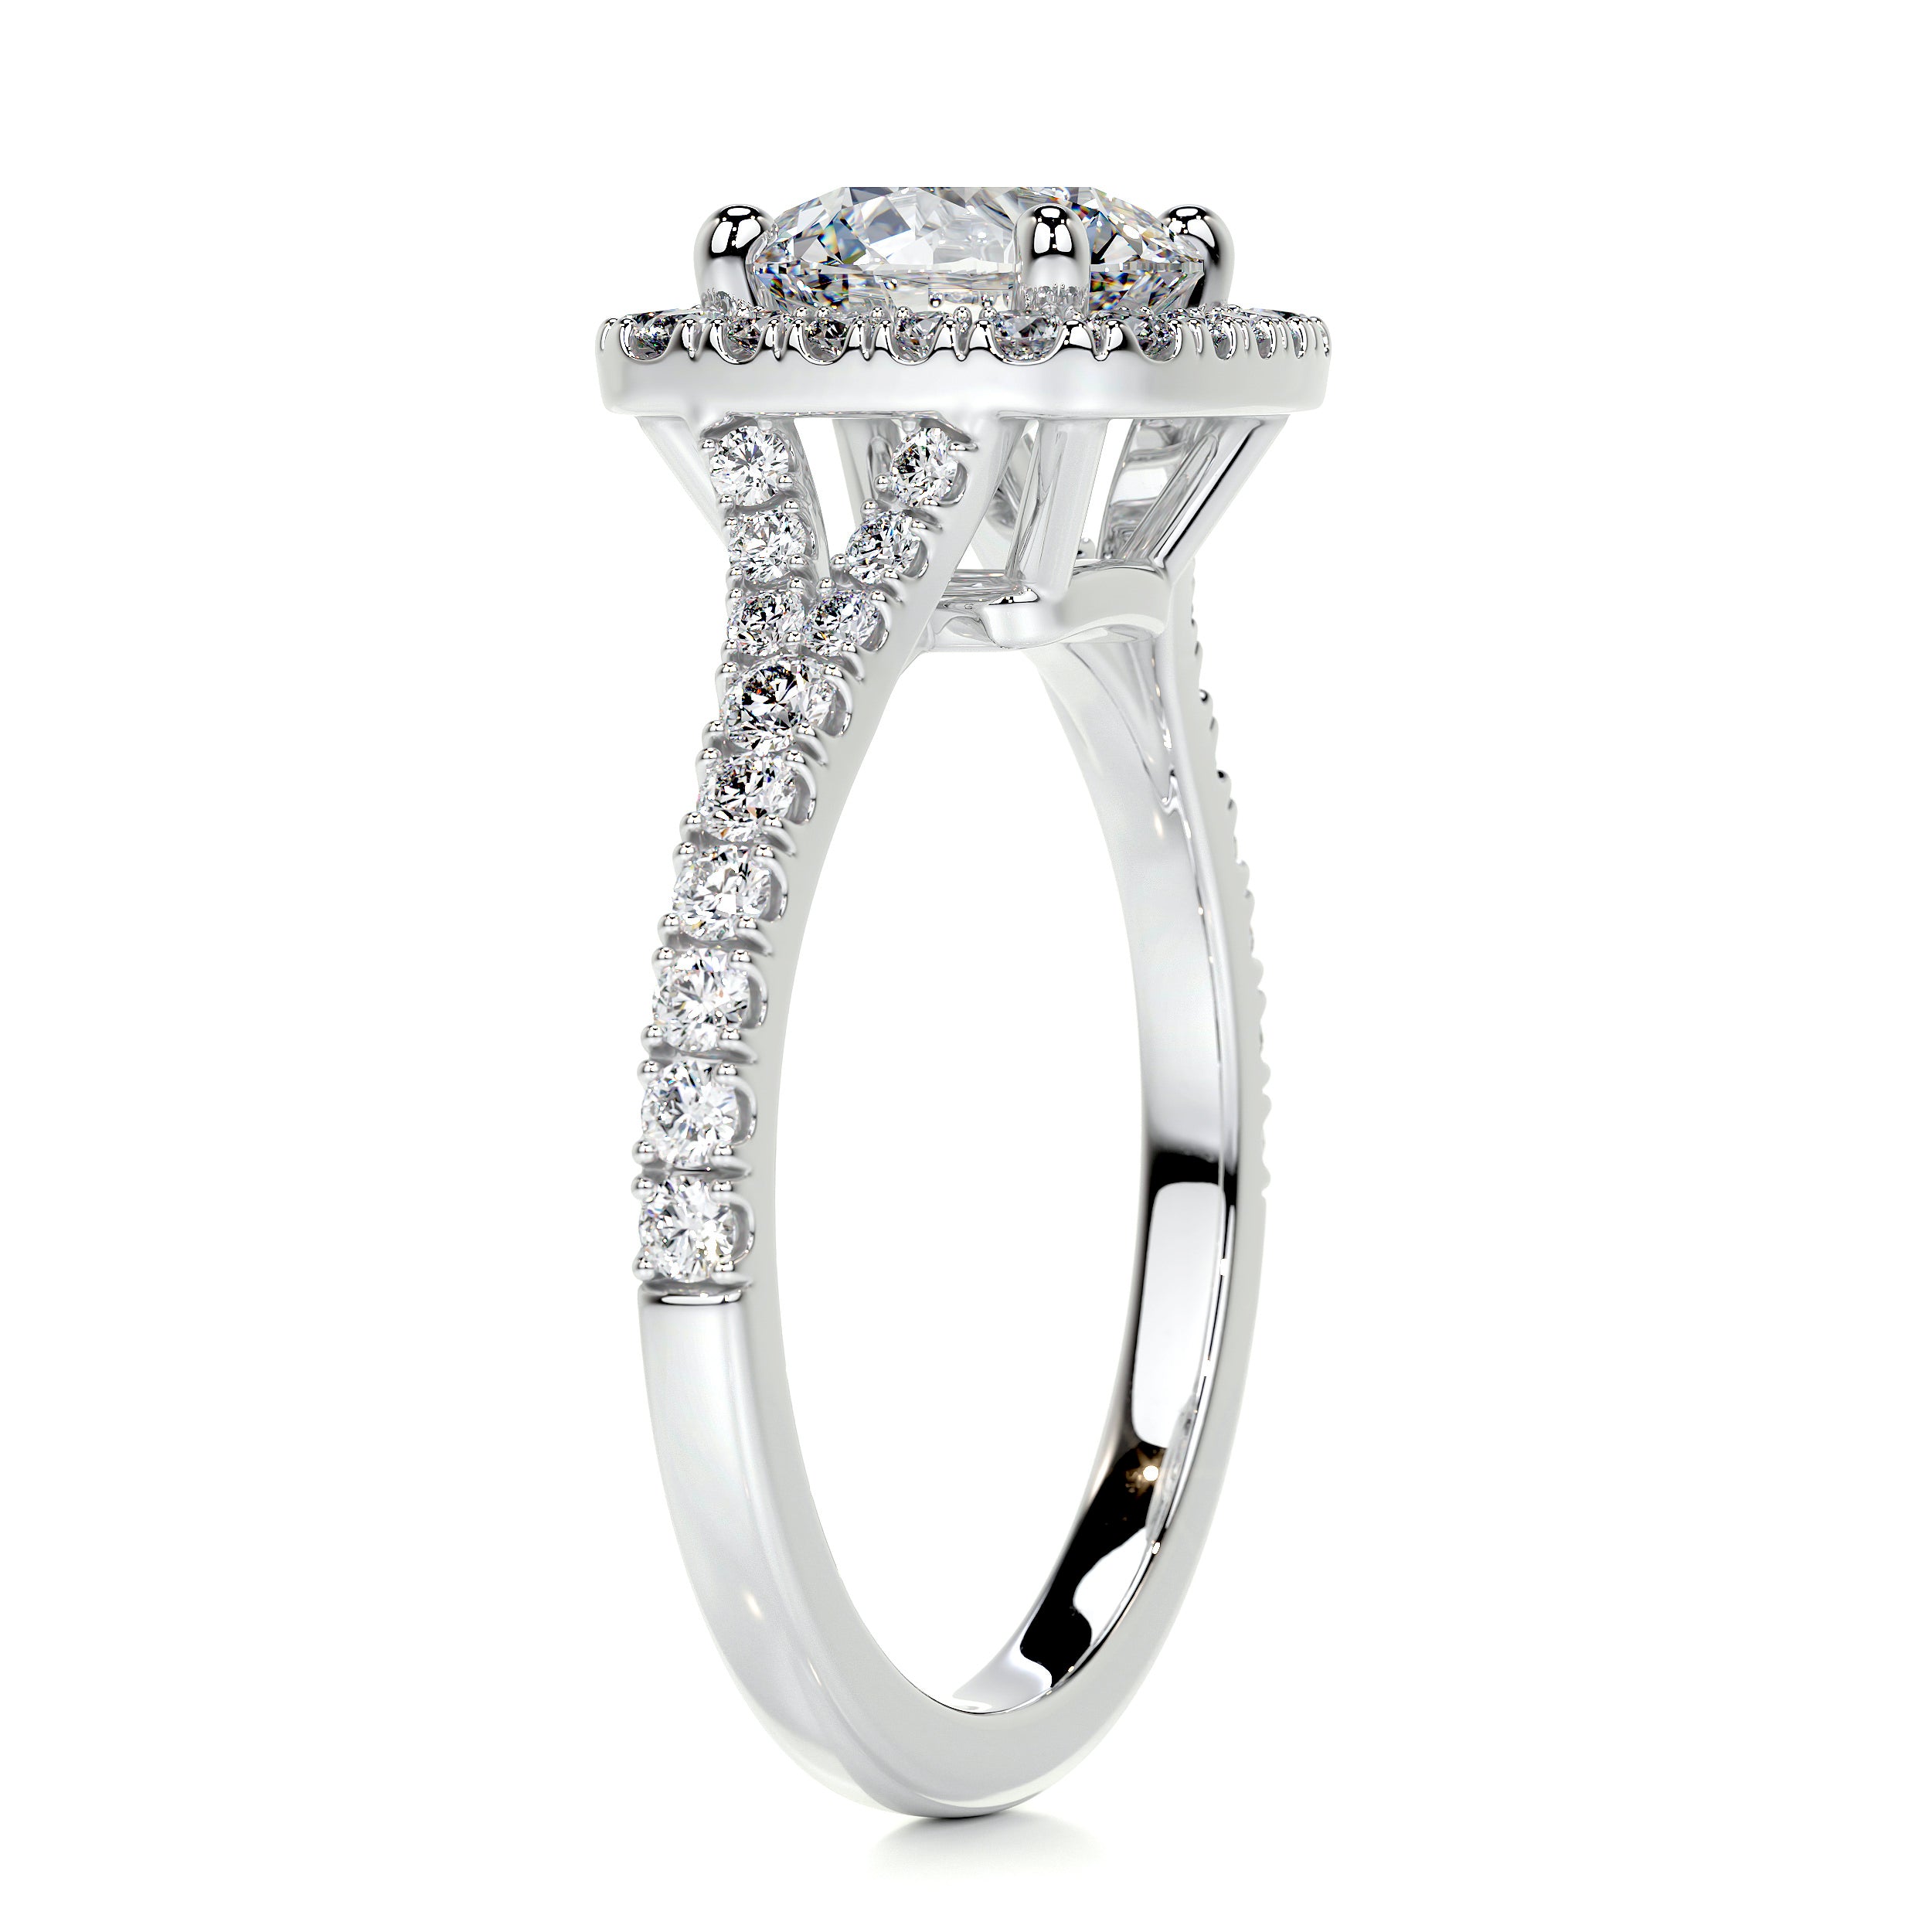 Addison Diamond Engagement Ring   (2 Carat) -14K White Gold